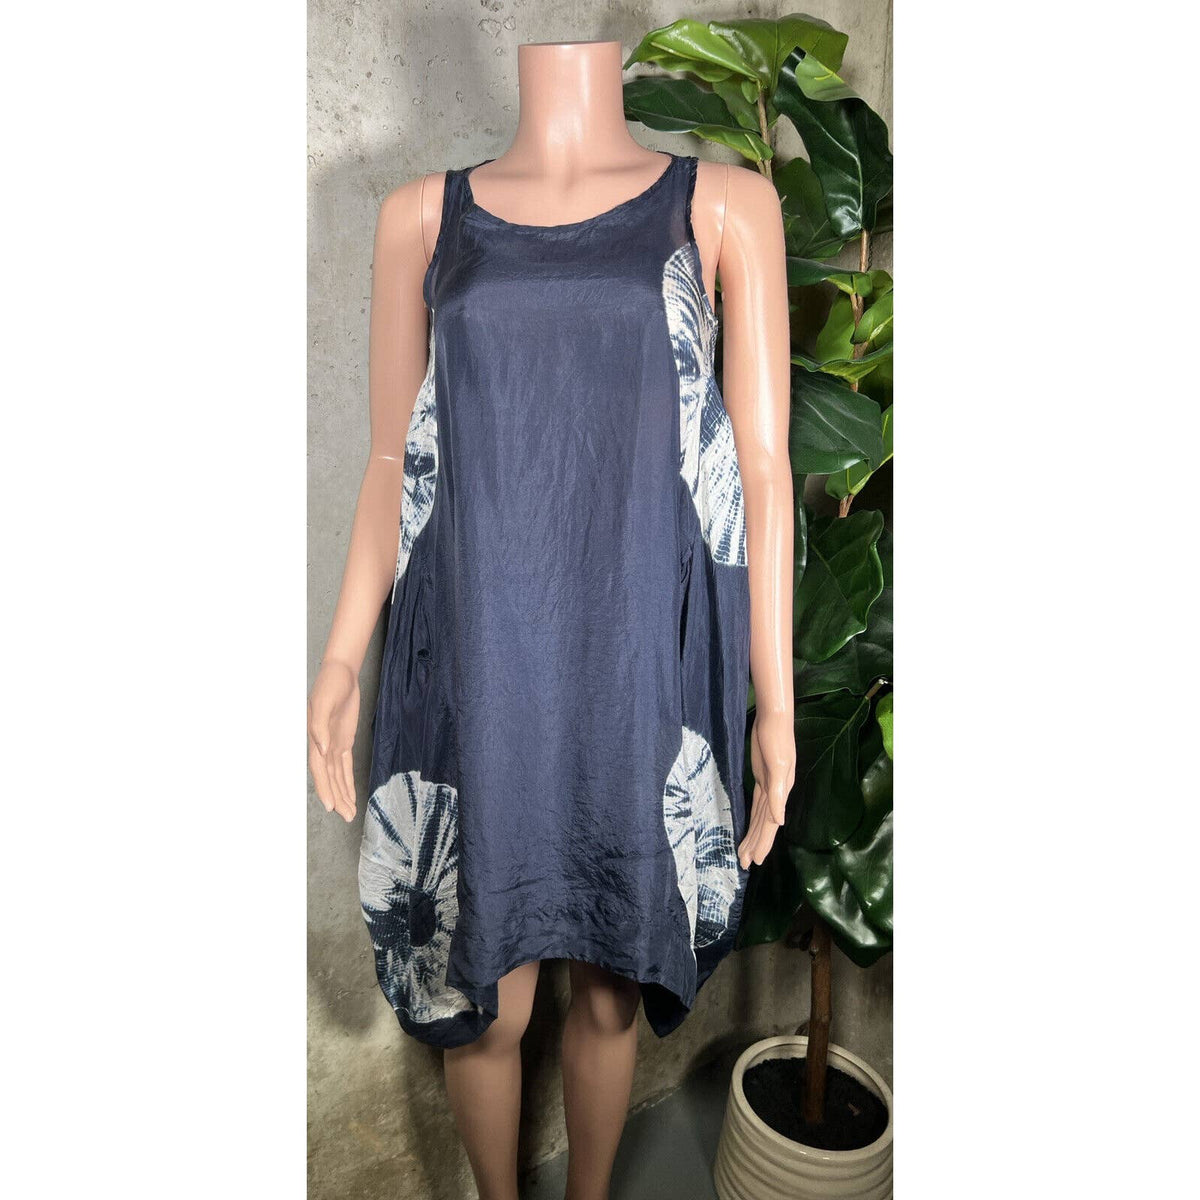 Biya Blue 100% Silk Sleeveless Dress Sz. Small